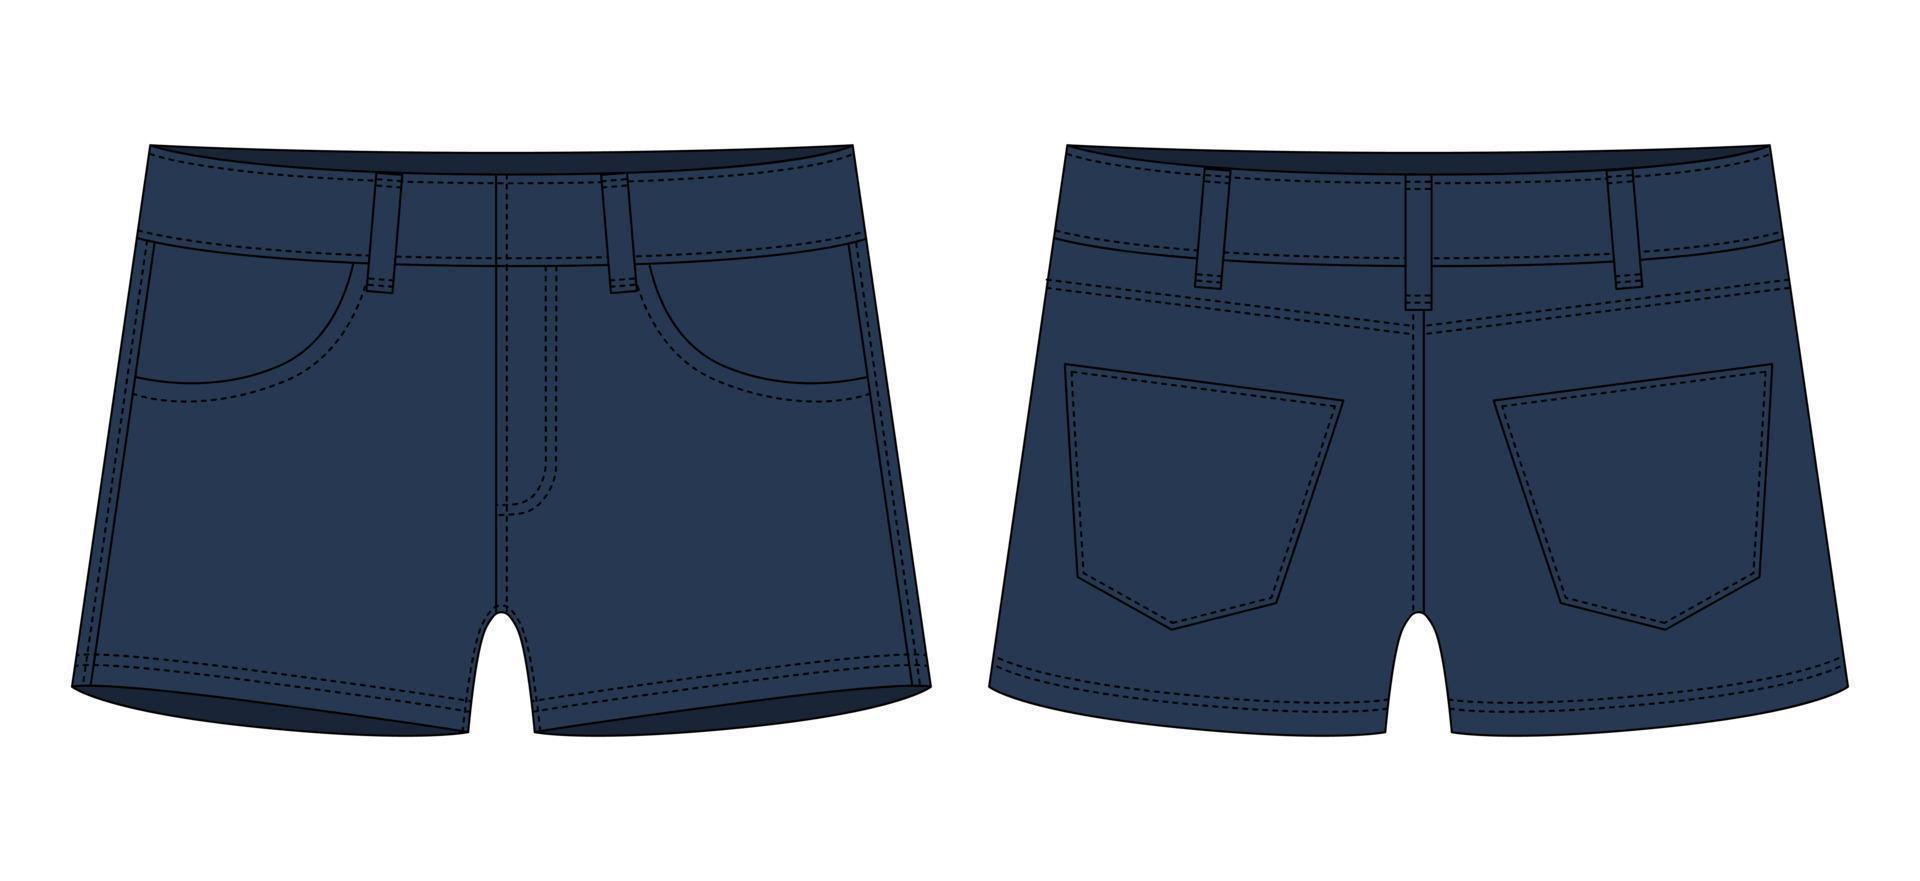 Denim short with pockets technical sketch. Dark blue color. Kids jeans shorts design template. vector